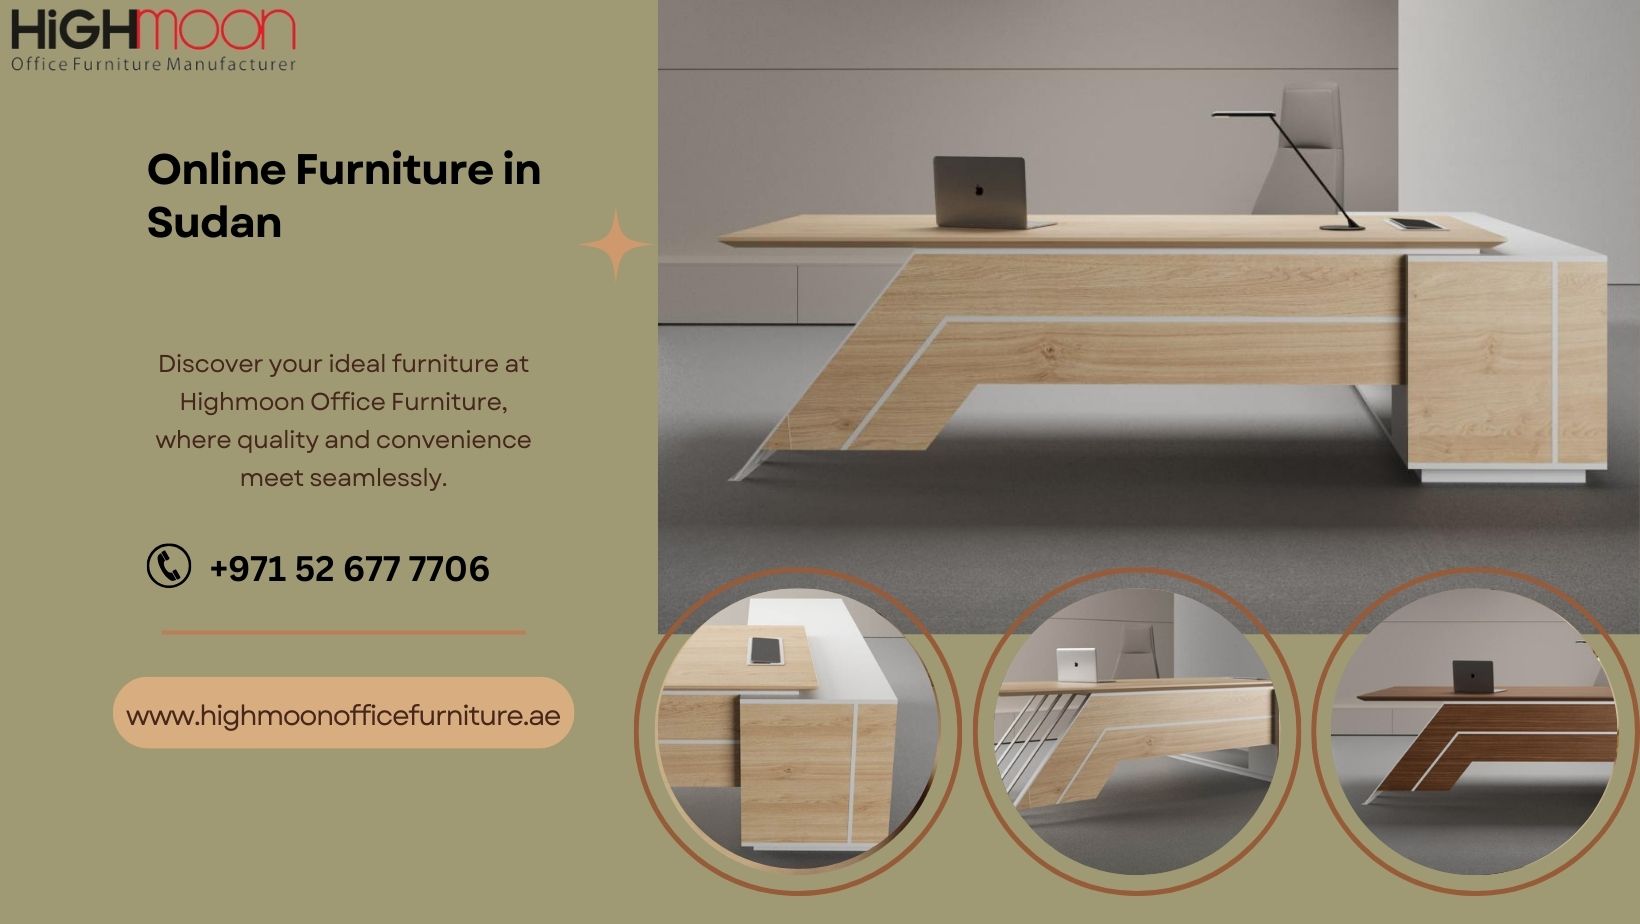 Online Furniture in Sudan